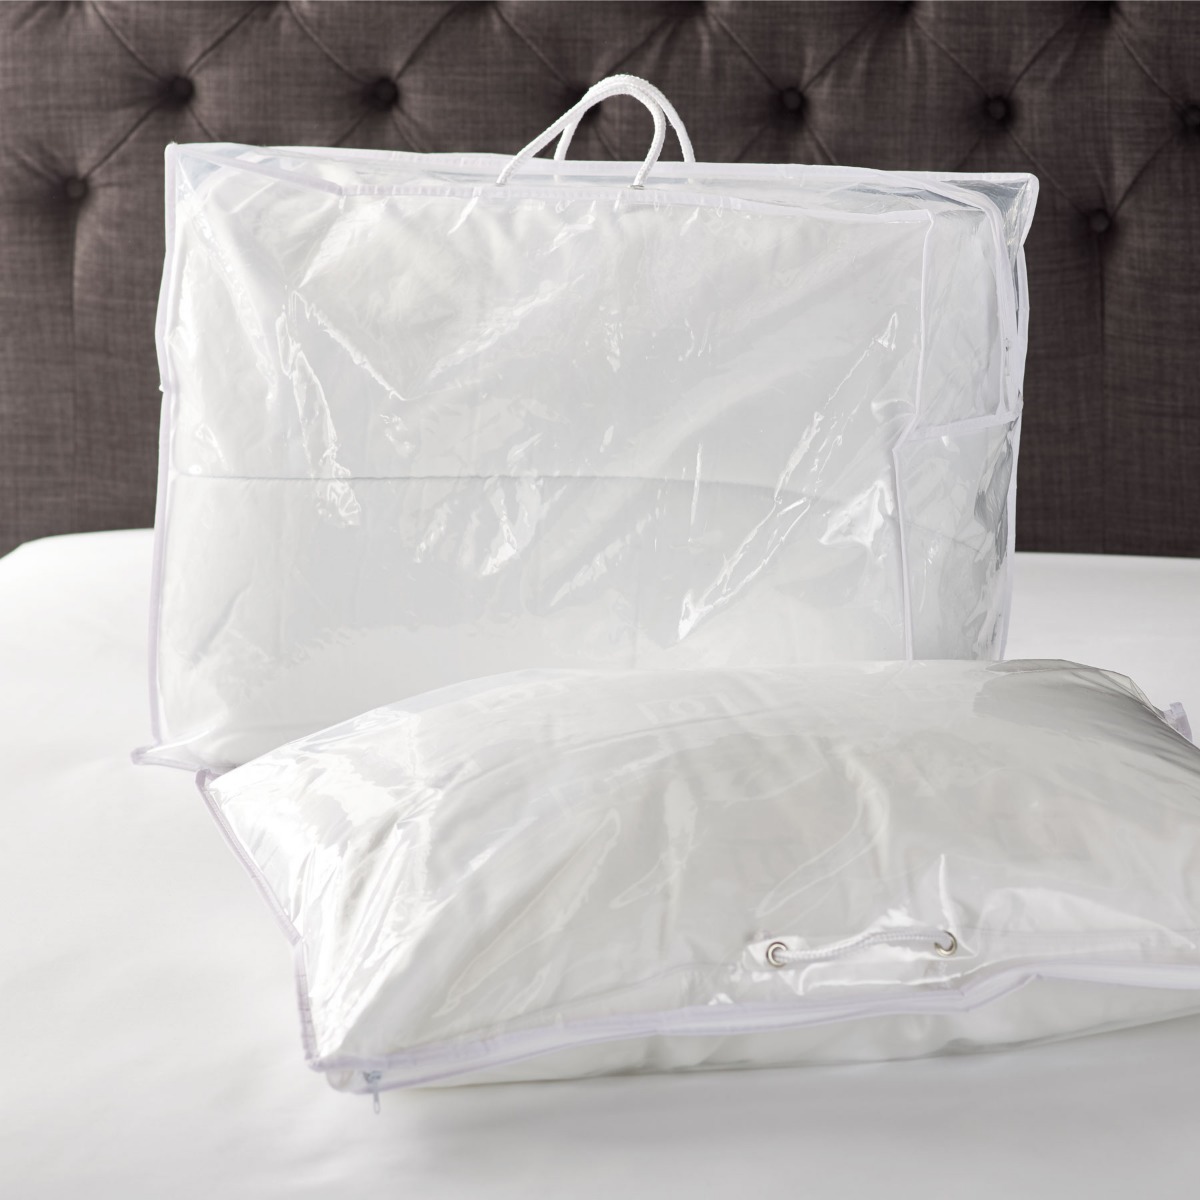 Packing polyethylene Bags for underwear